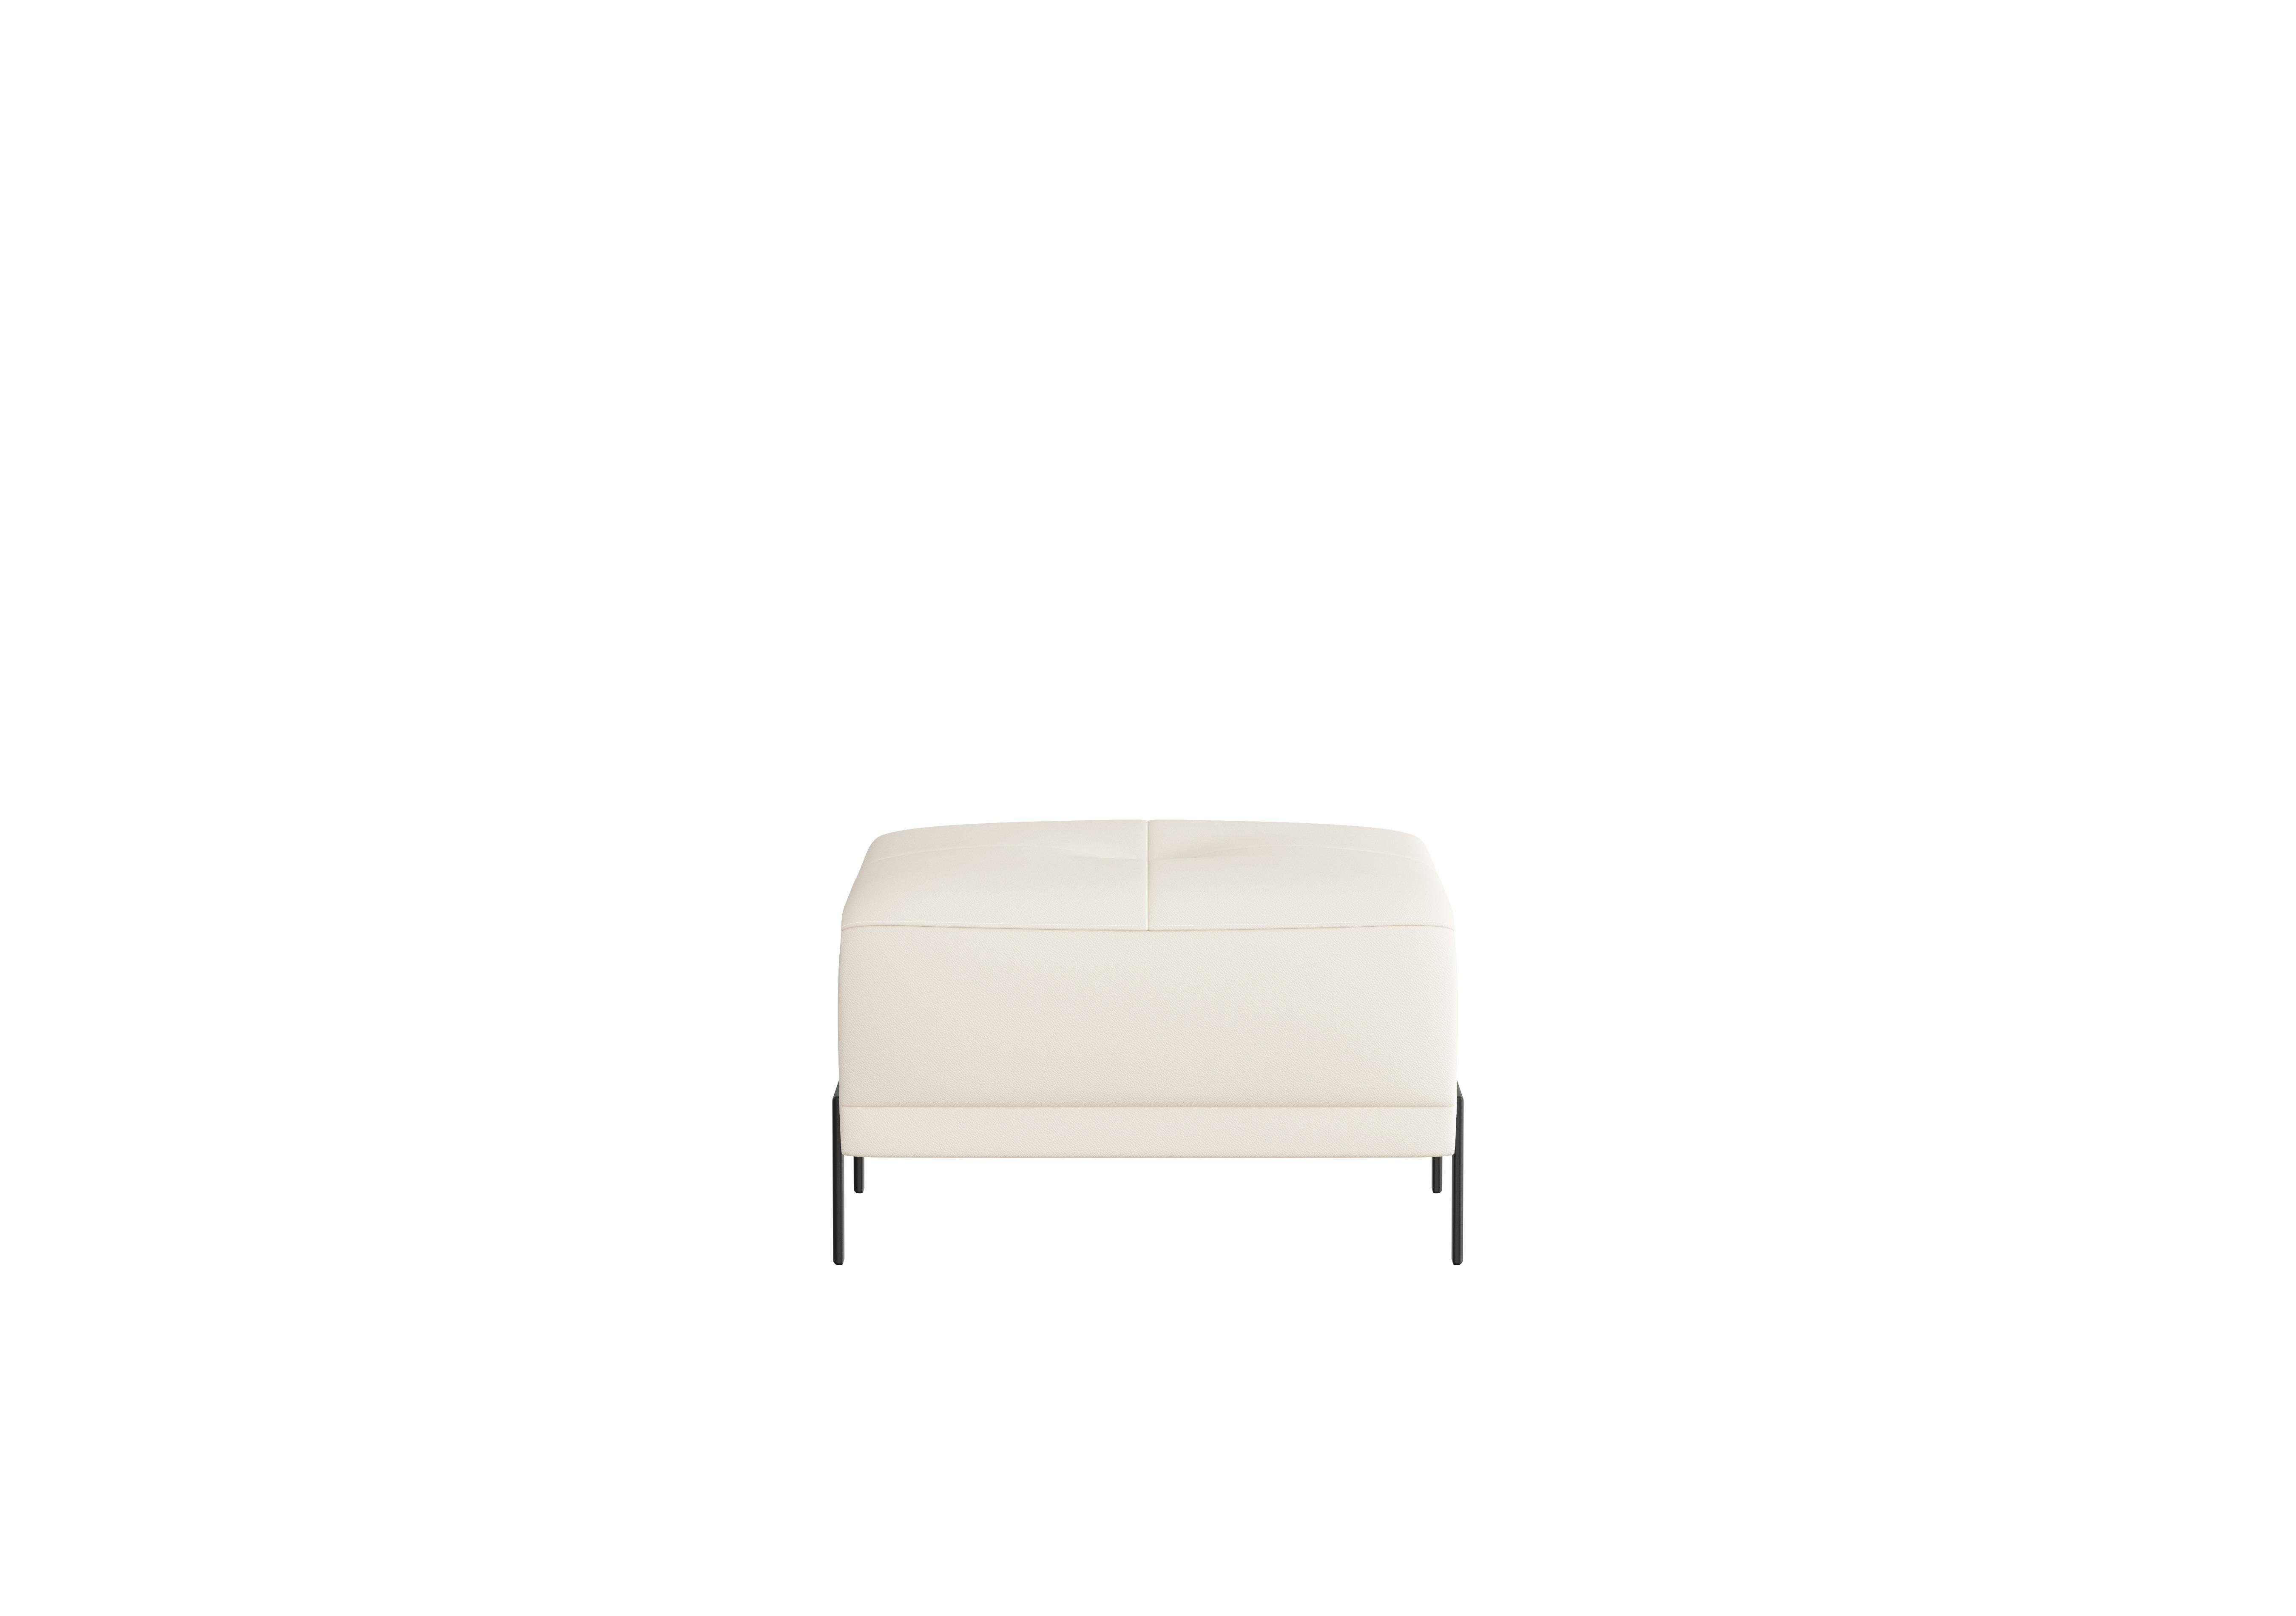 Theron Leather Footstool in Torello Bianco 93 Ti Ft on Furniture Village